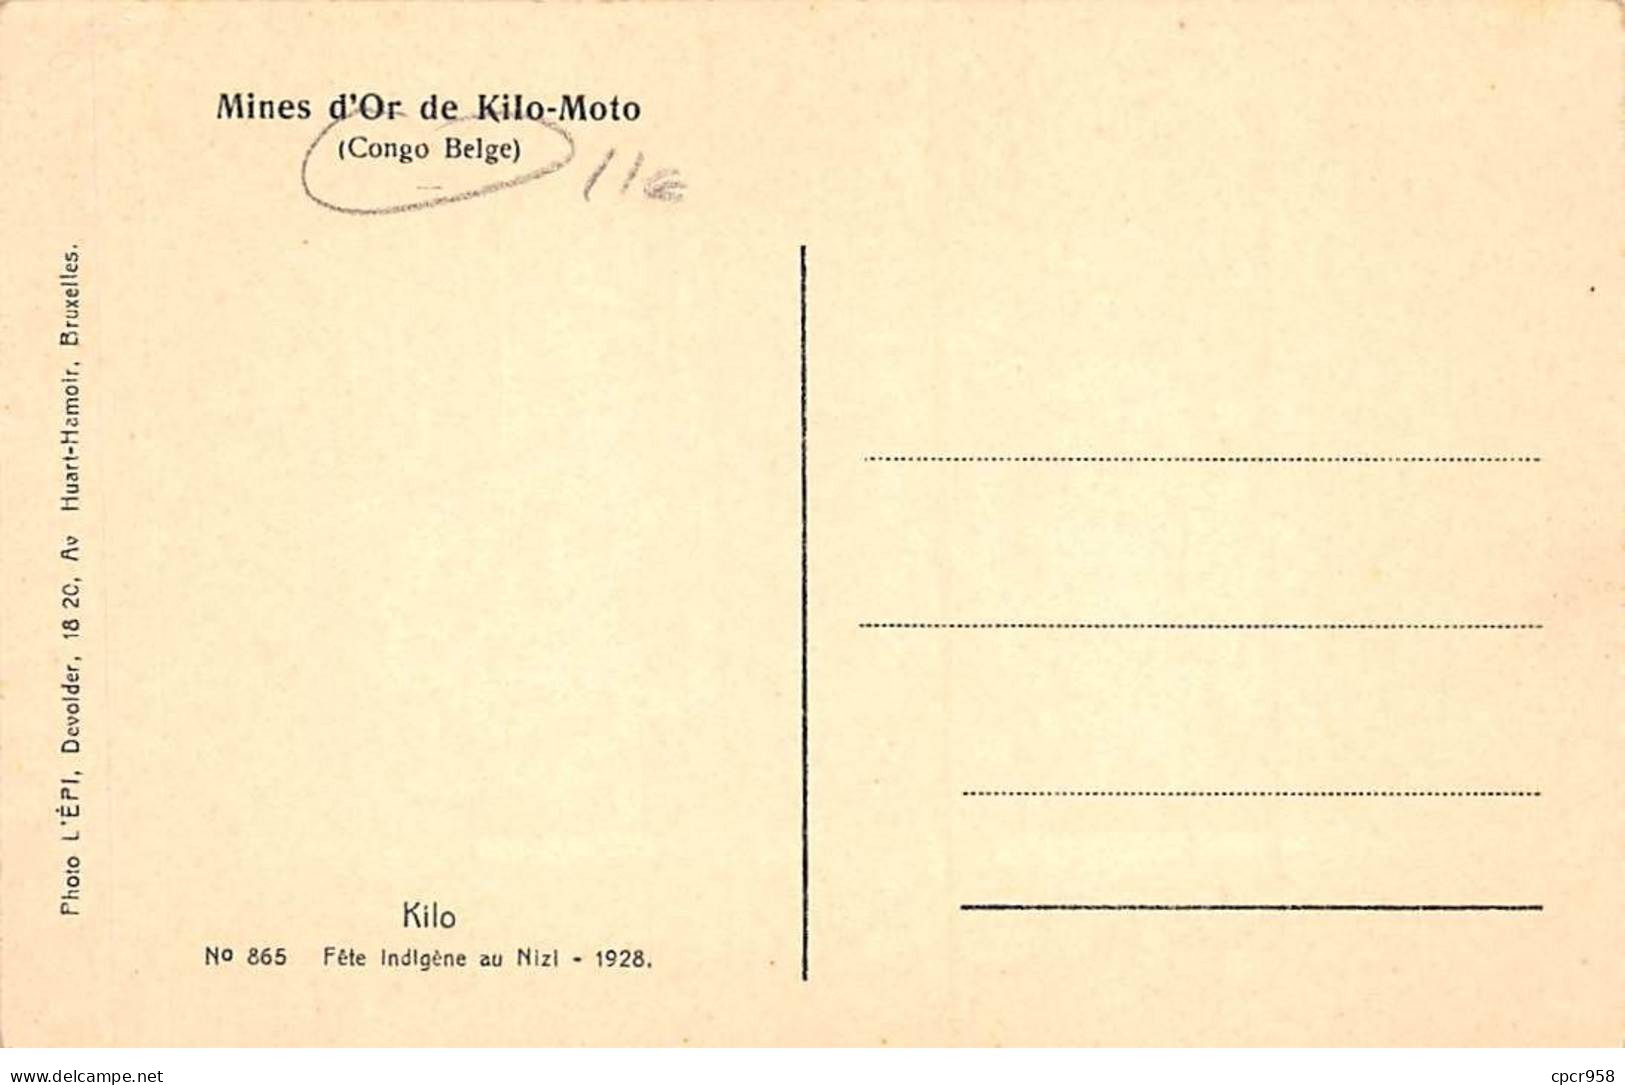 CONGO - SAN53905 - Mines D'or De Kilo Moto - Fête Indigène Au Nizi - 1928 - Congo Belga